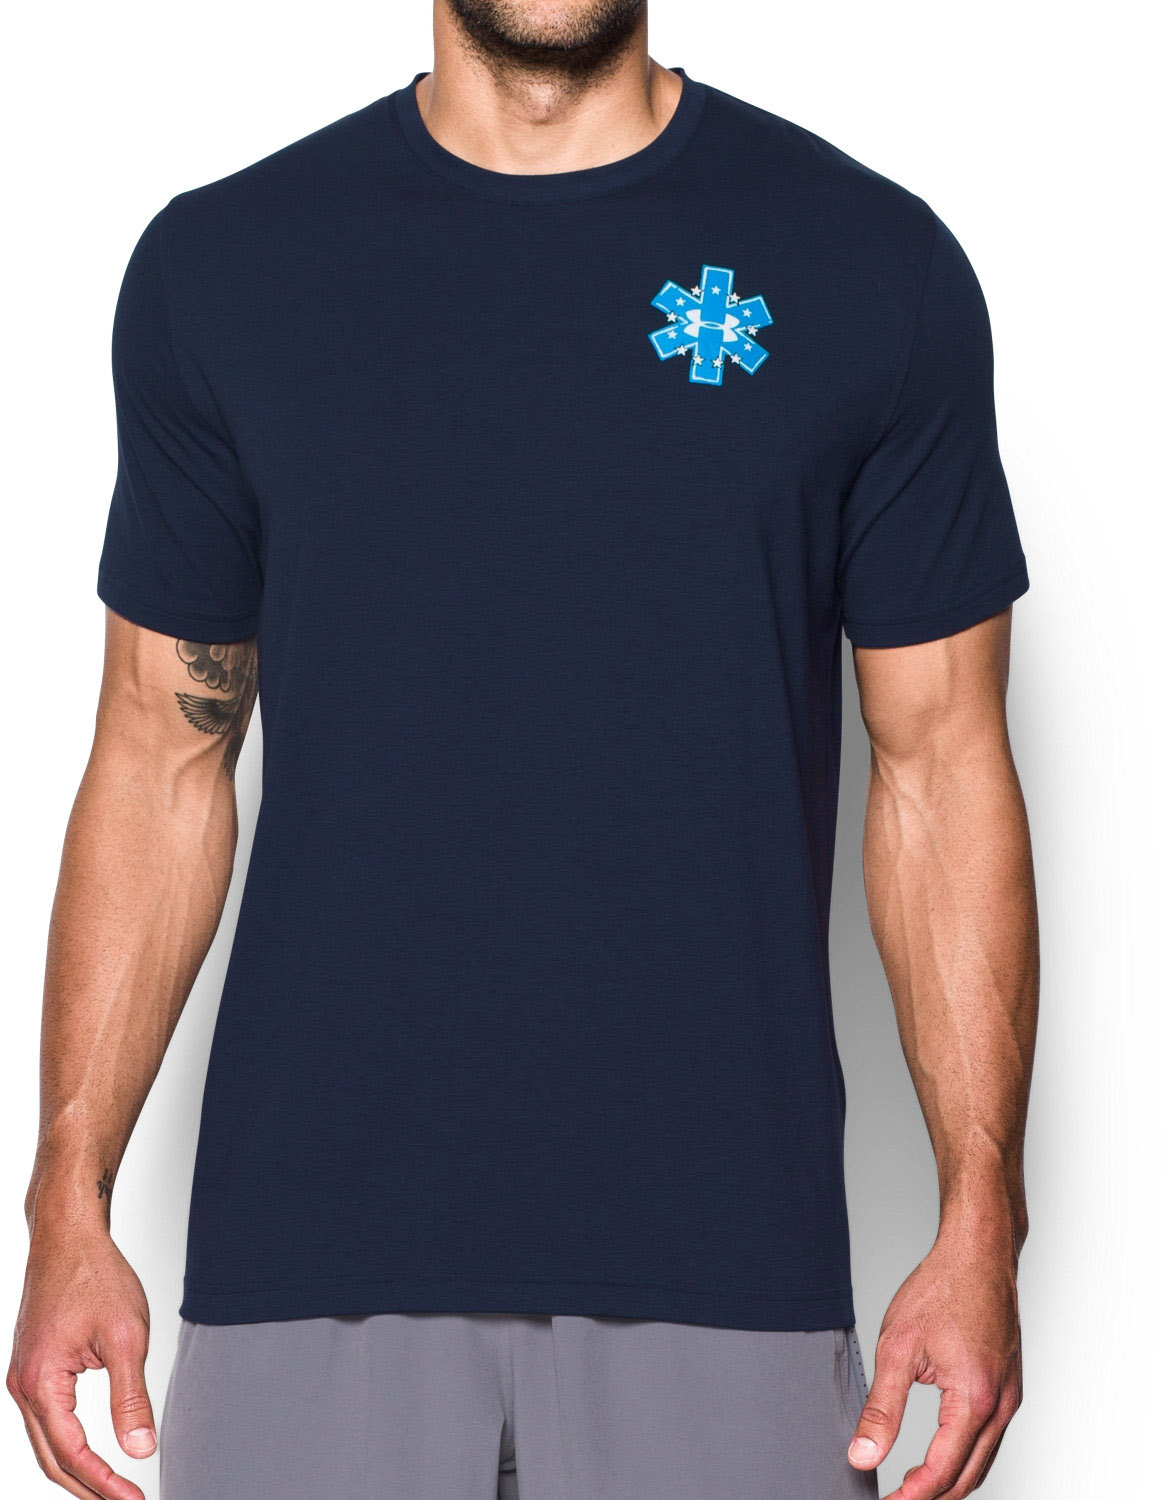 Under Armour - Mens EMS Graphic T-Shirt